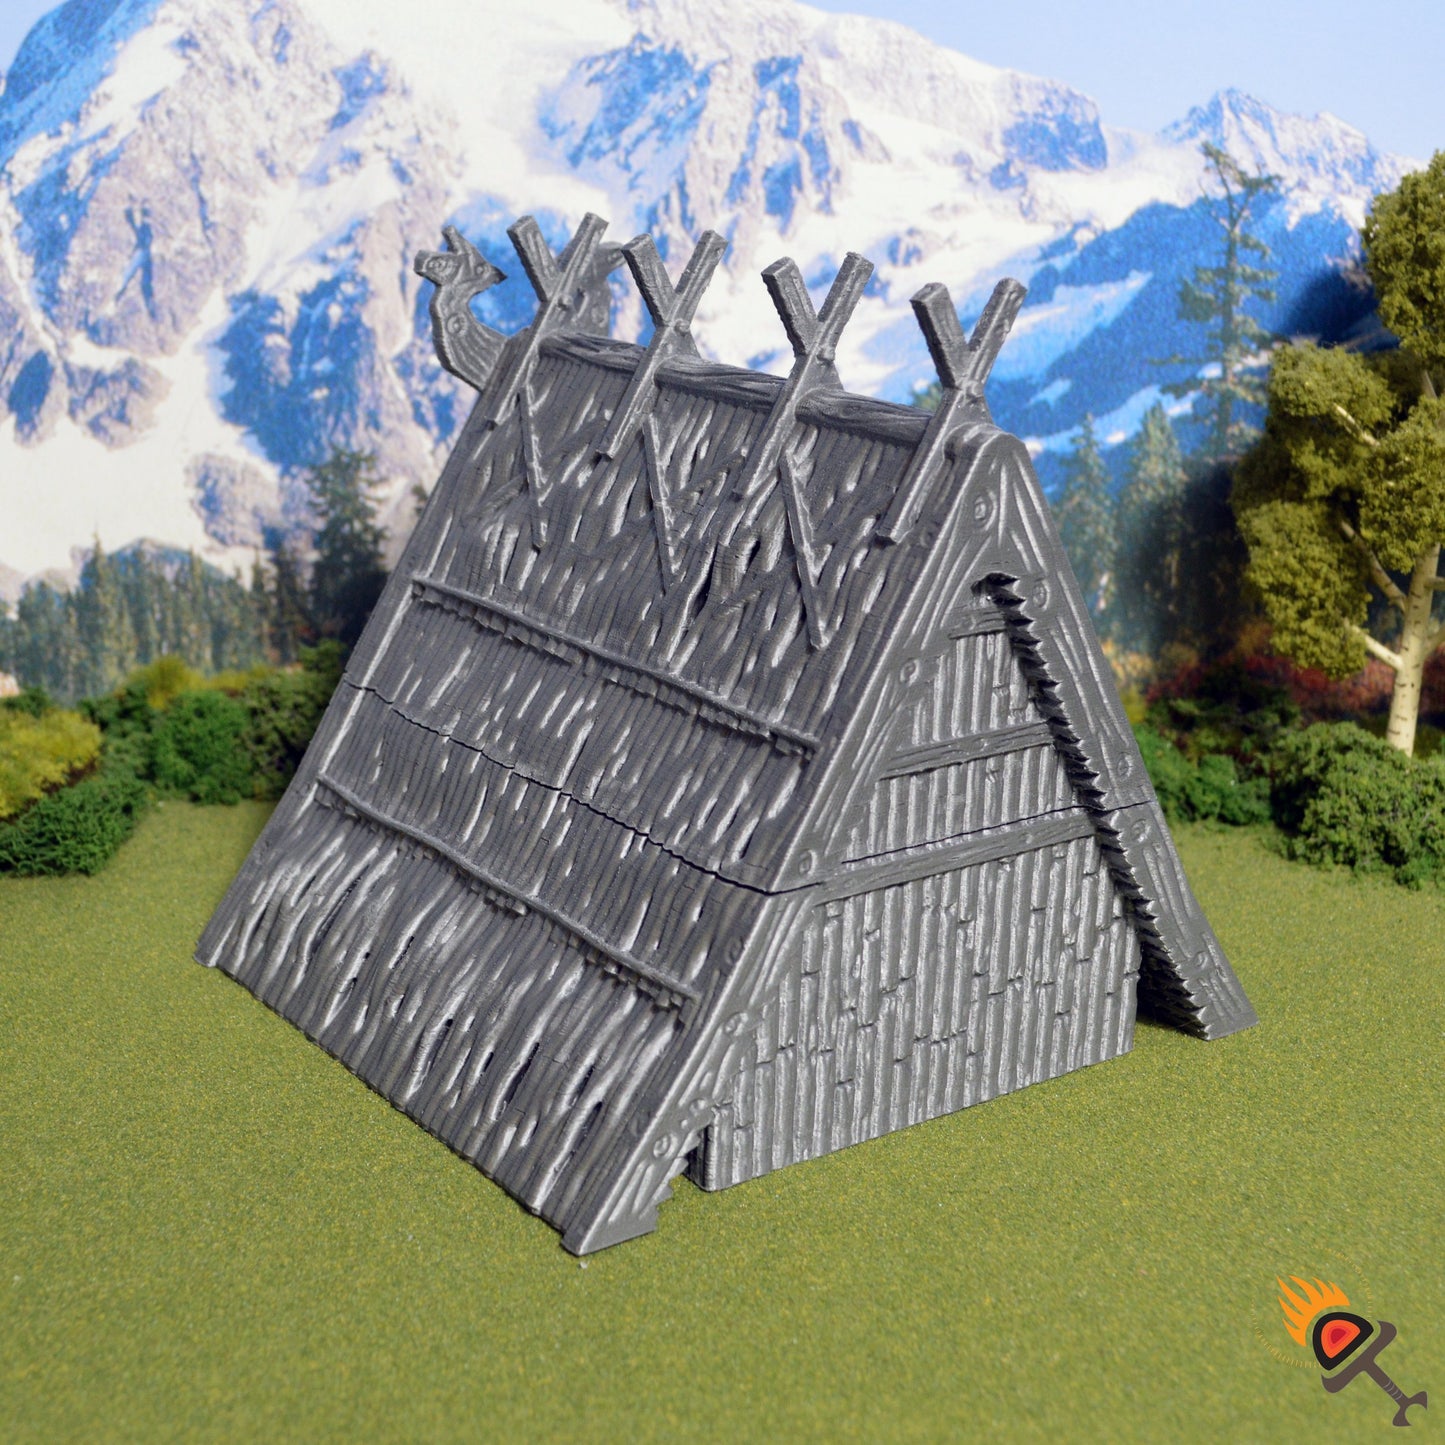 Miniature Viking House 28mm for D&D Terrain, DnD Pathfinder Fantasy Barbarian, Dark Realms - Viking Hut